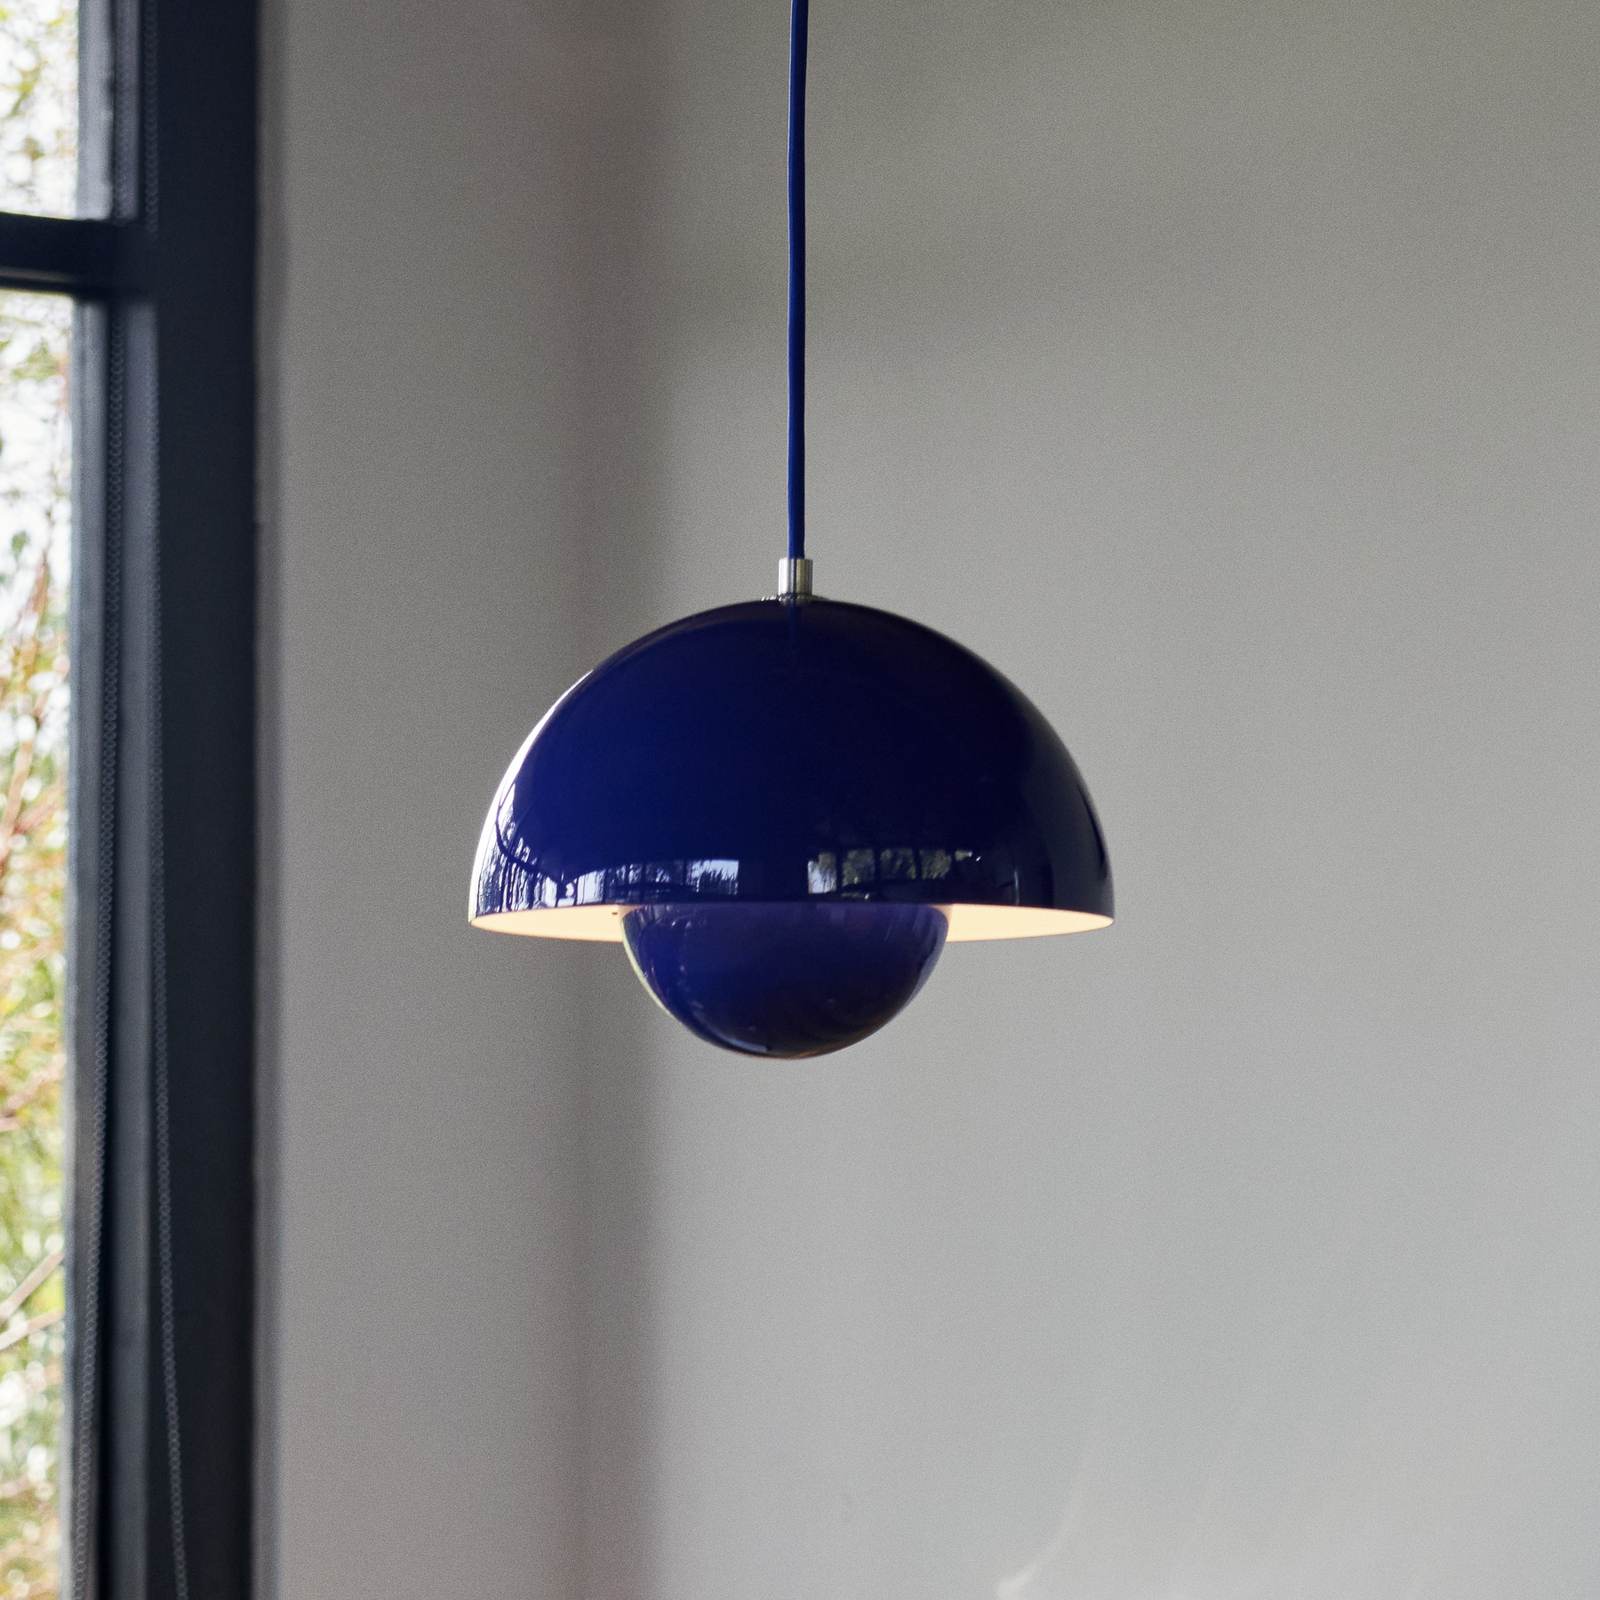 &Tradition hanglamp Bloempot VP1, Ø 23 cm, kobaltblauw